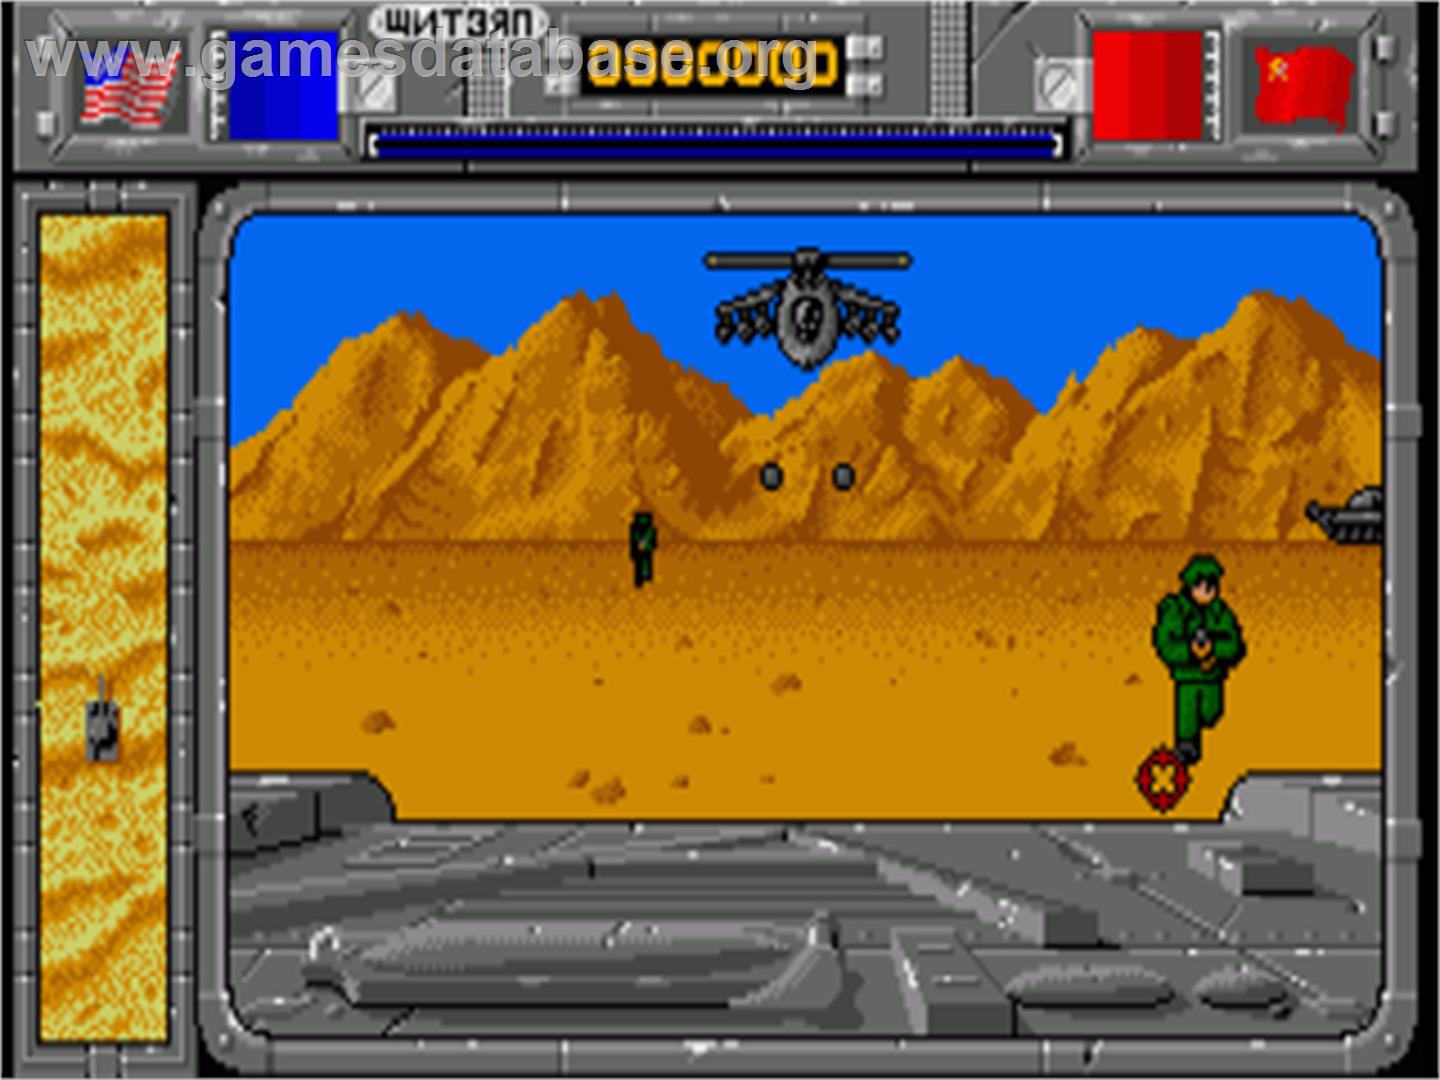 Rambo III - Commodore Amiga - Artwork - In Game